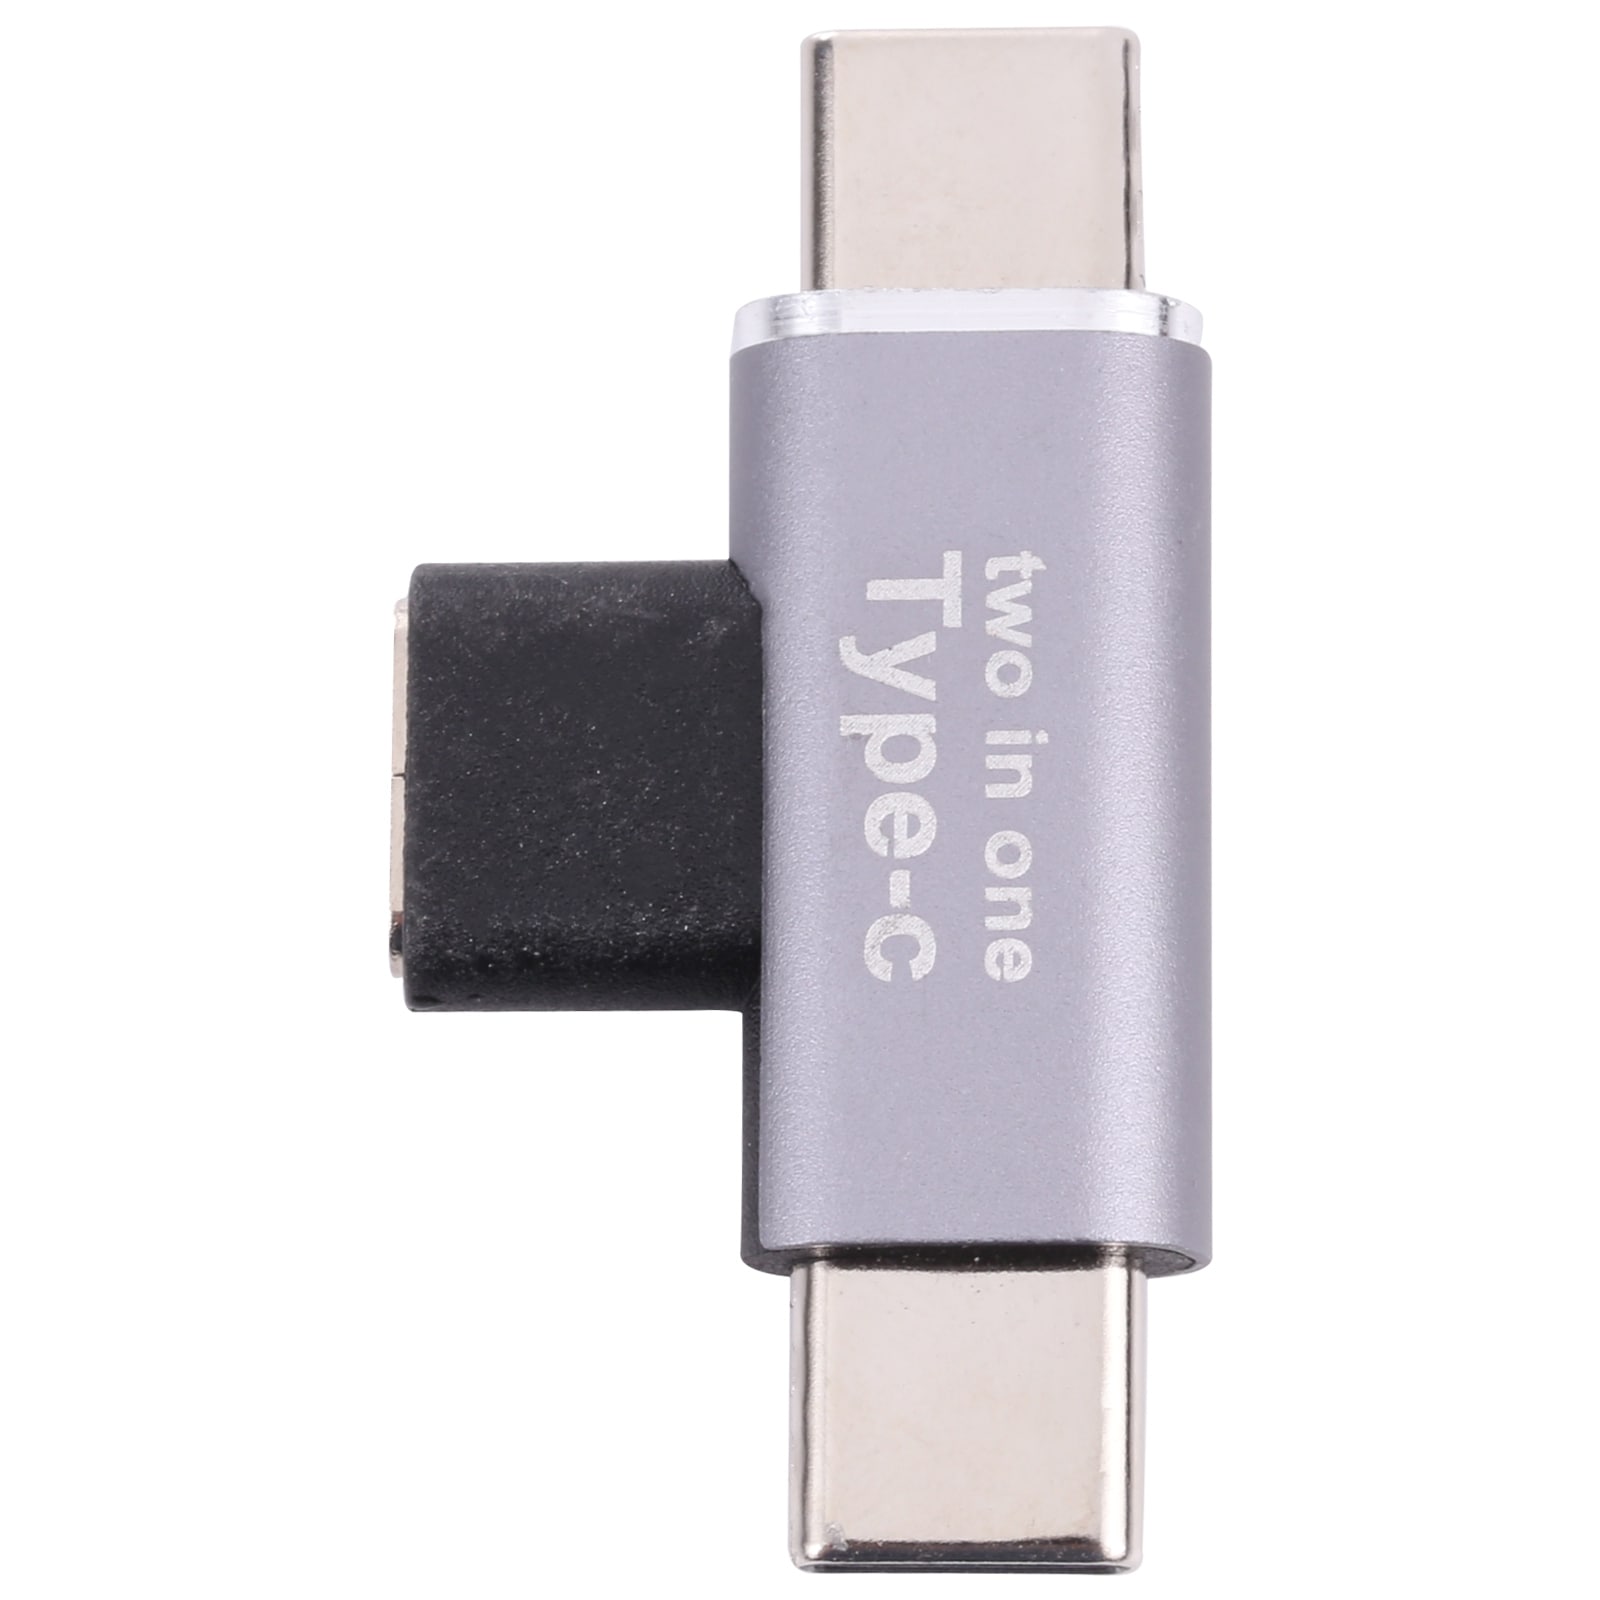 Adapter USB-C-hona till USB-C-hane + USB-C-hane